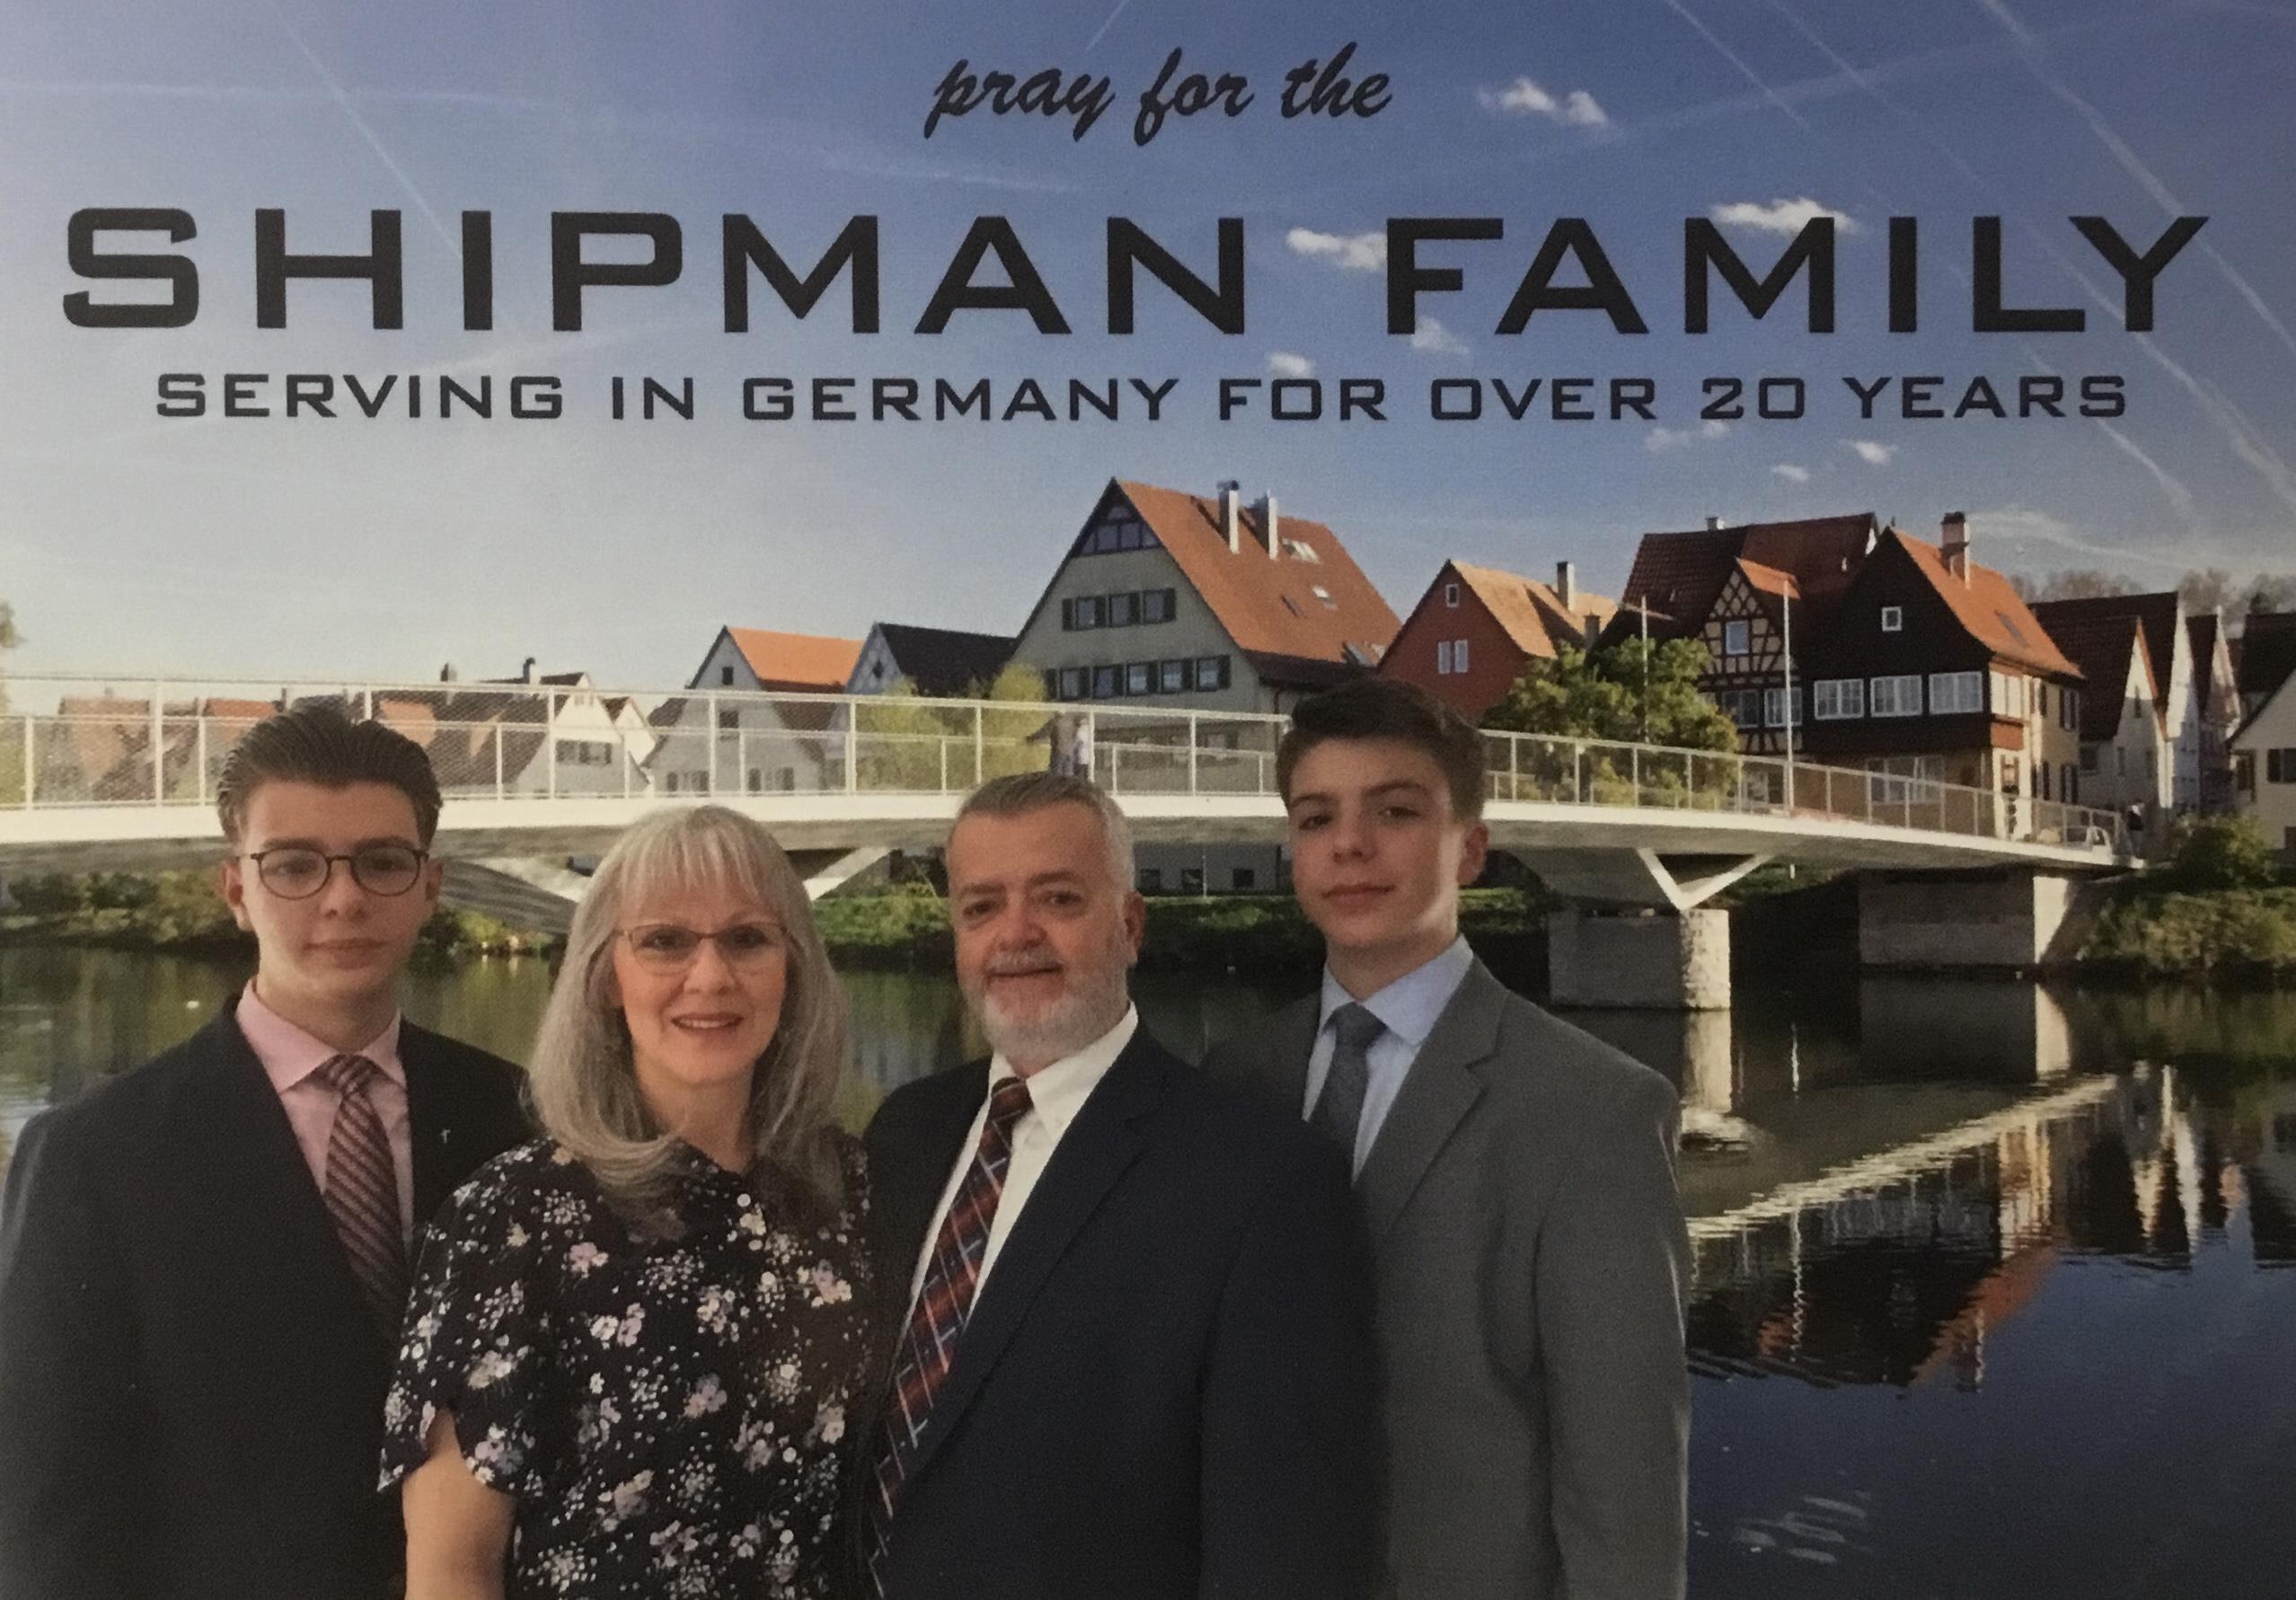 The Shipman family